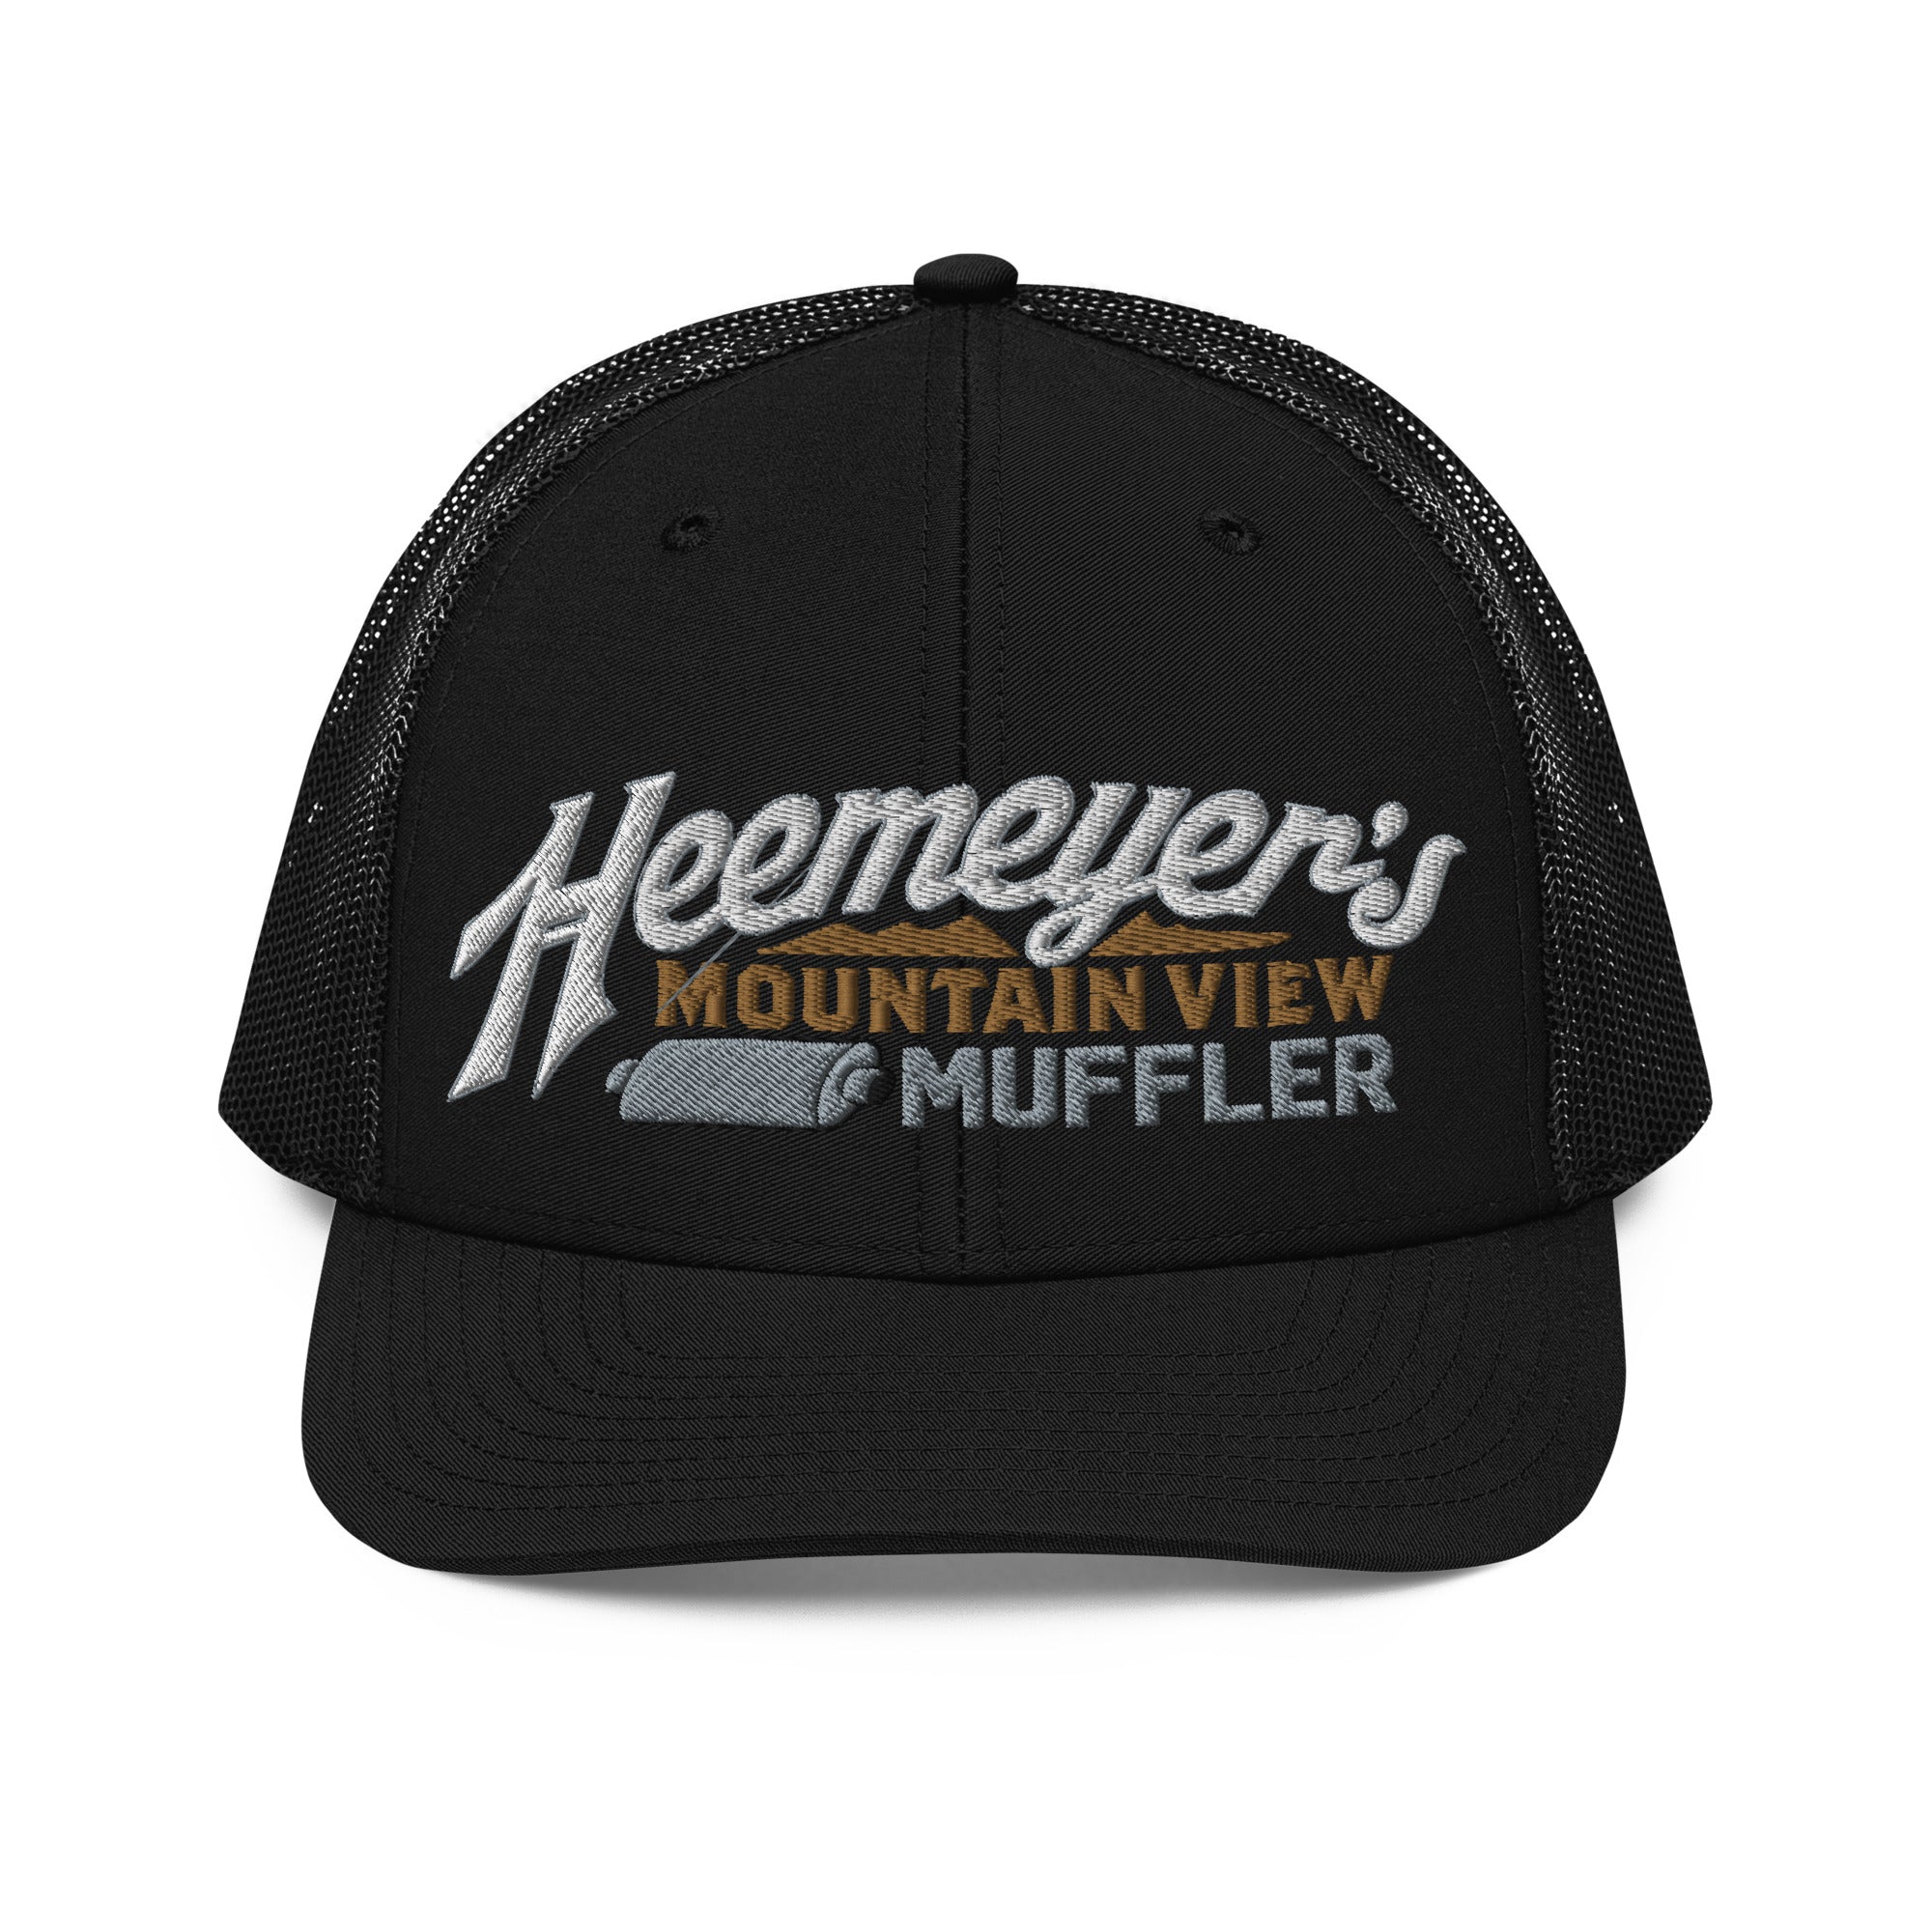 Heemeyer's Mountain View Muffler 6-Panel Trucker Cap